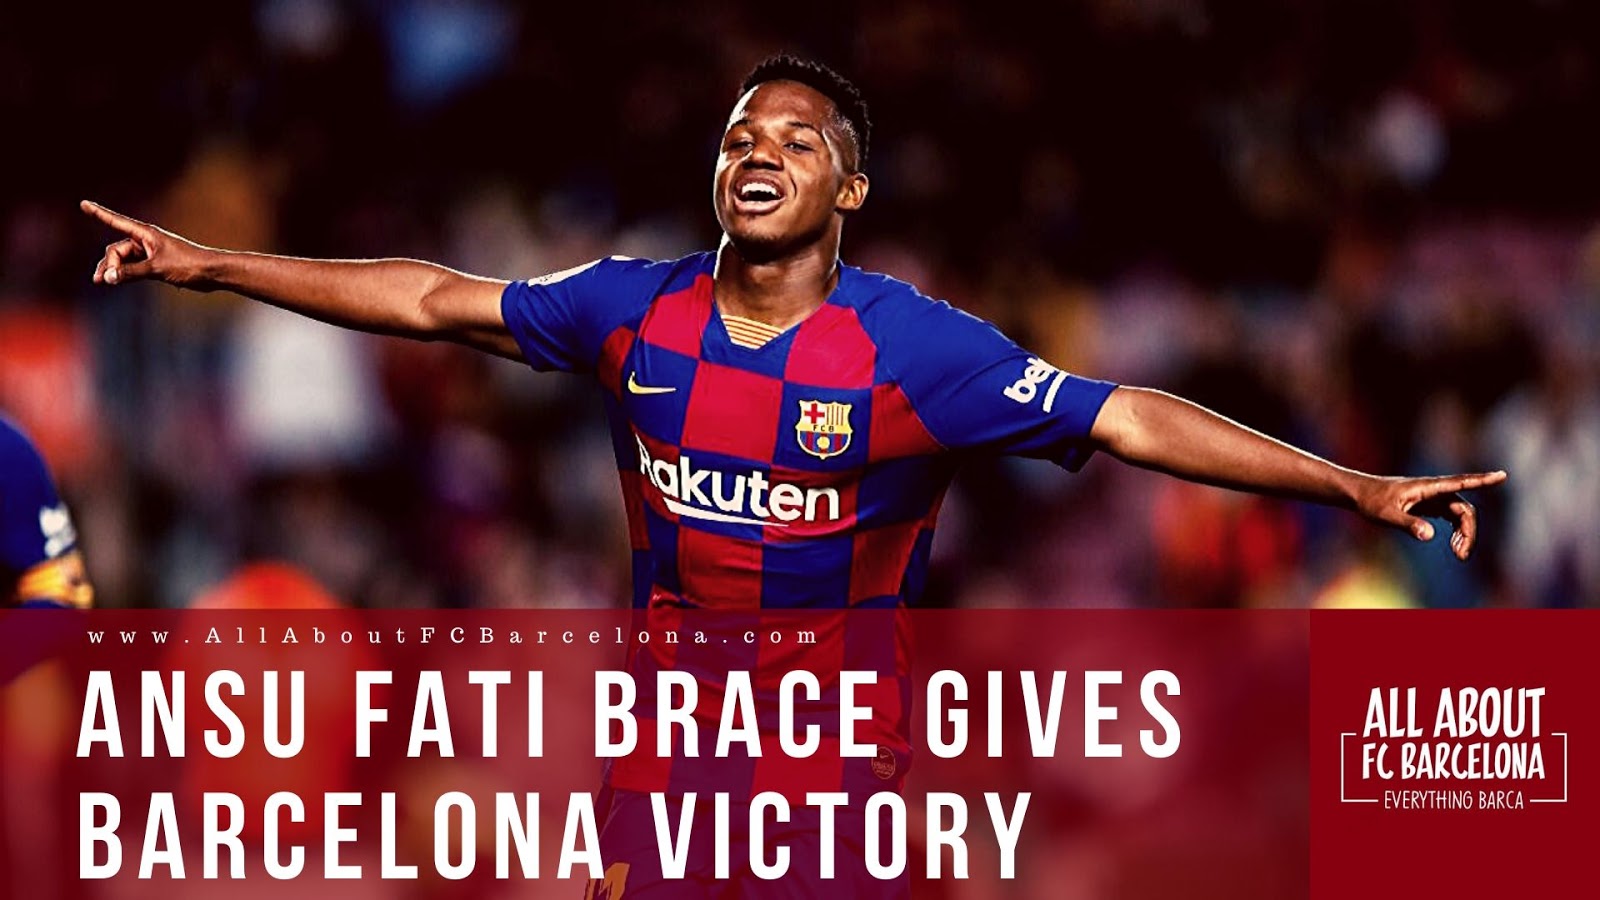 Ansu Fati Brace Secures Barcelona an Essential Victory that inspires Hope #AnsuFati #FCBarcelona